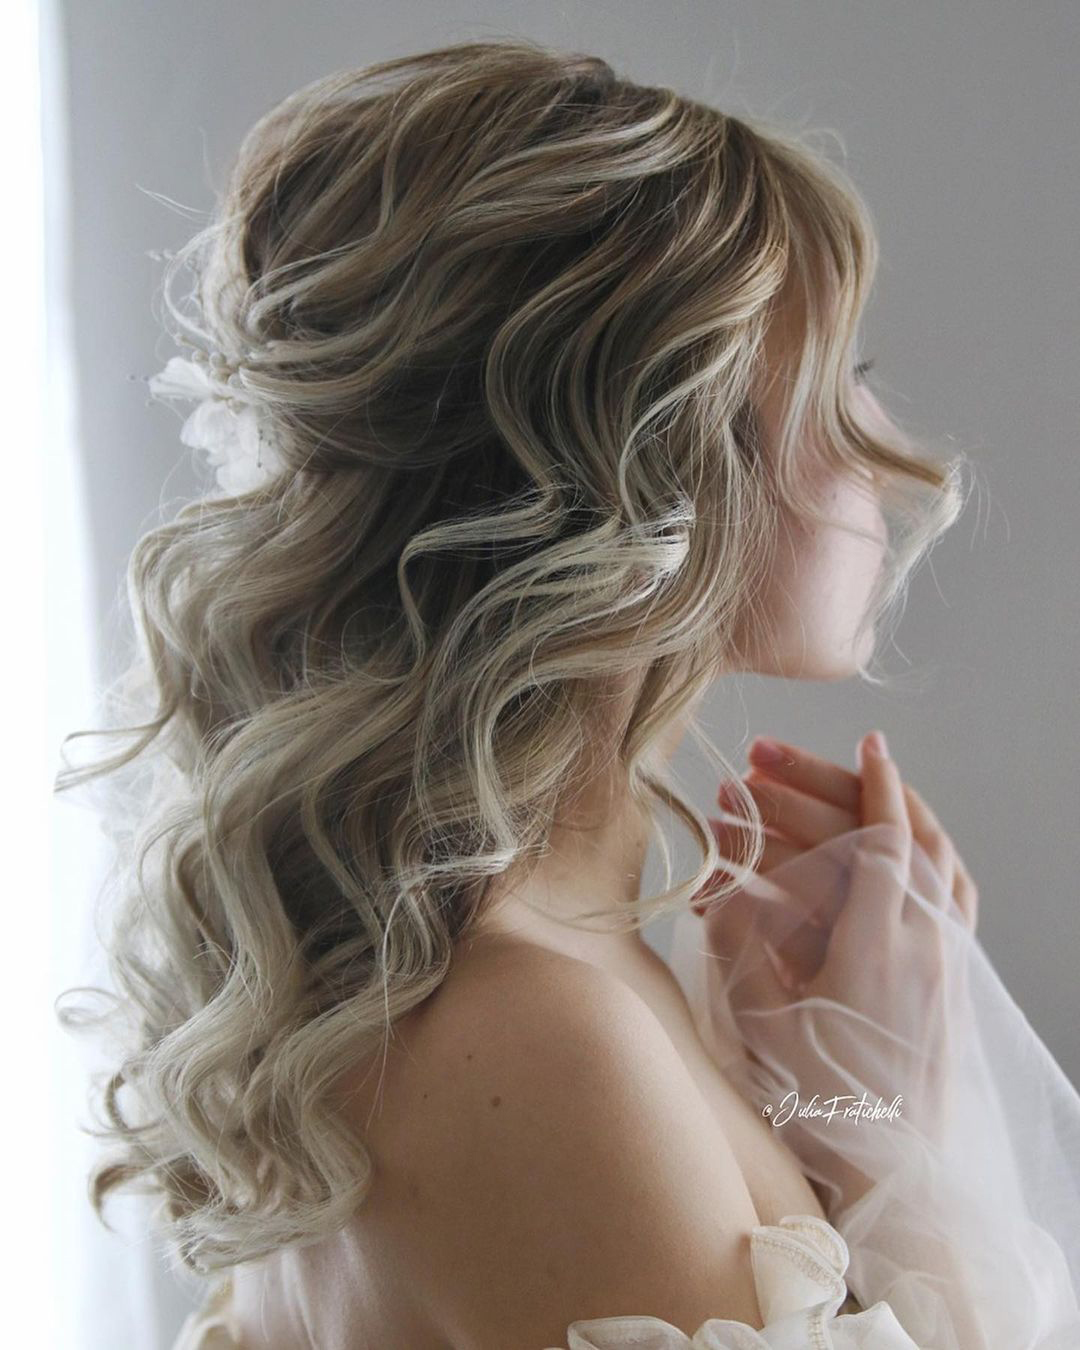 diy wedding hairstyles thin curls juliafratichelli.bridalstylist